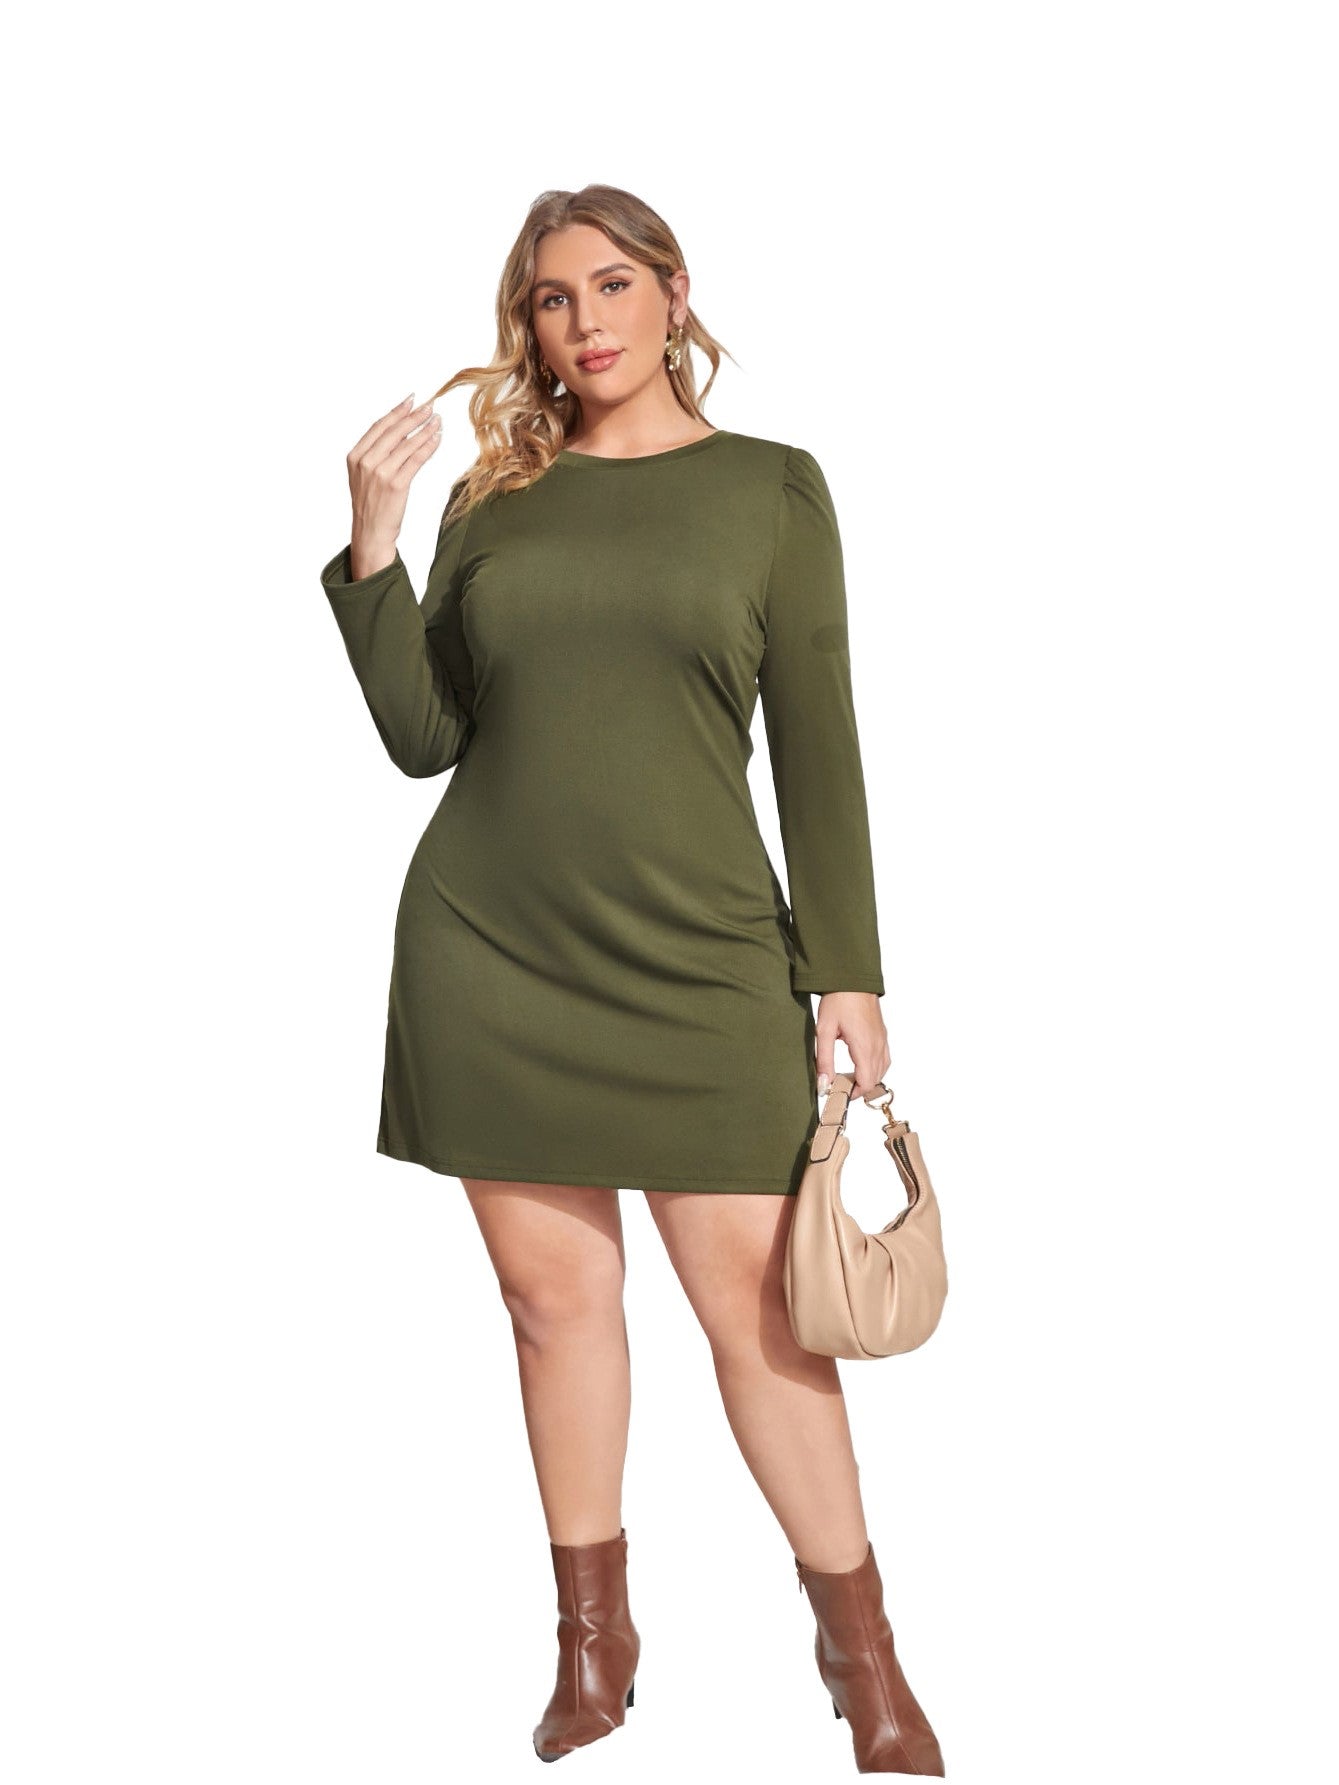 Elegant Slim Green Stretch Knit Dress